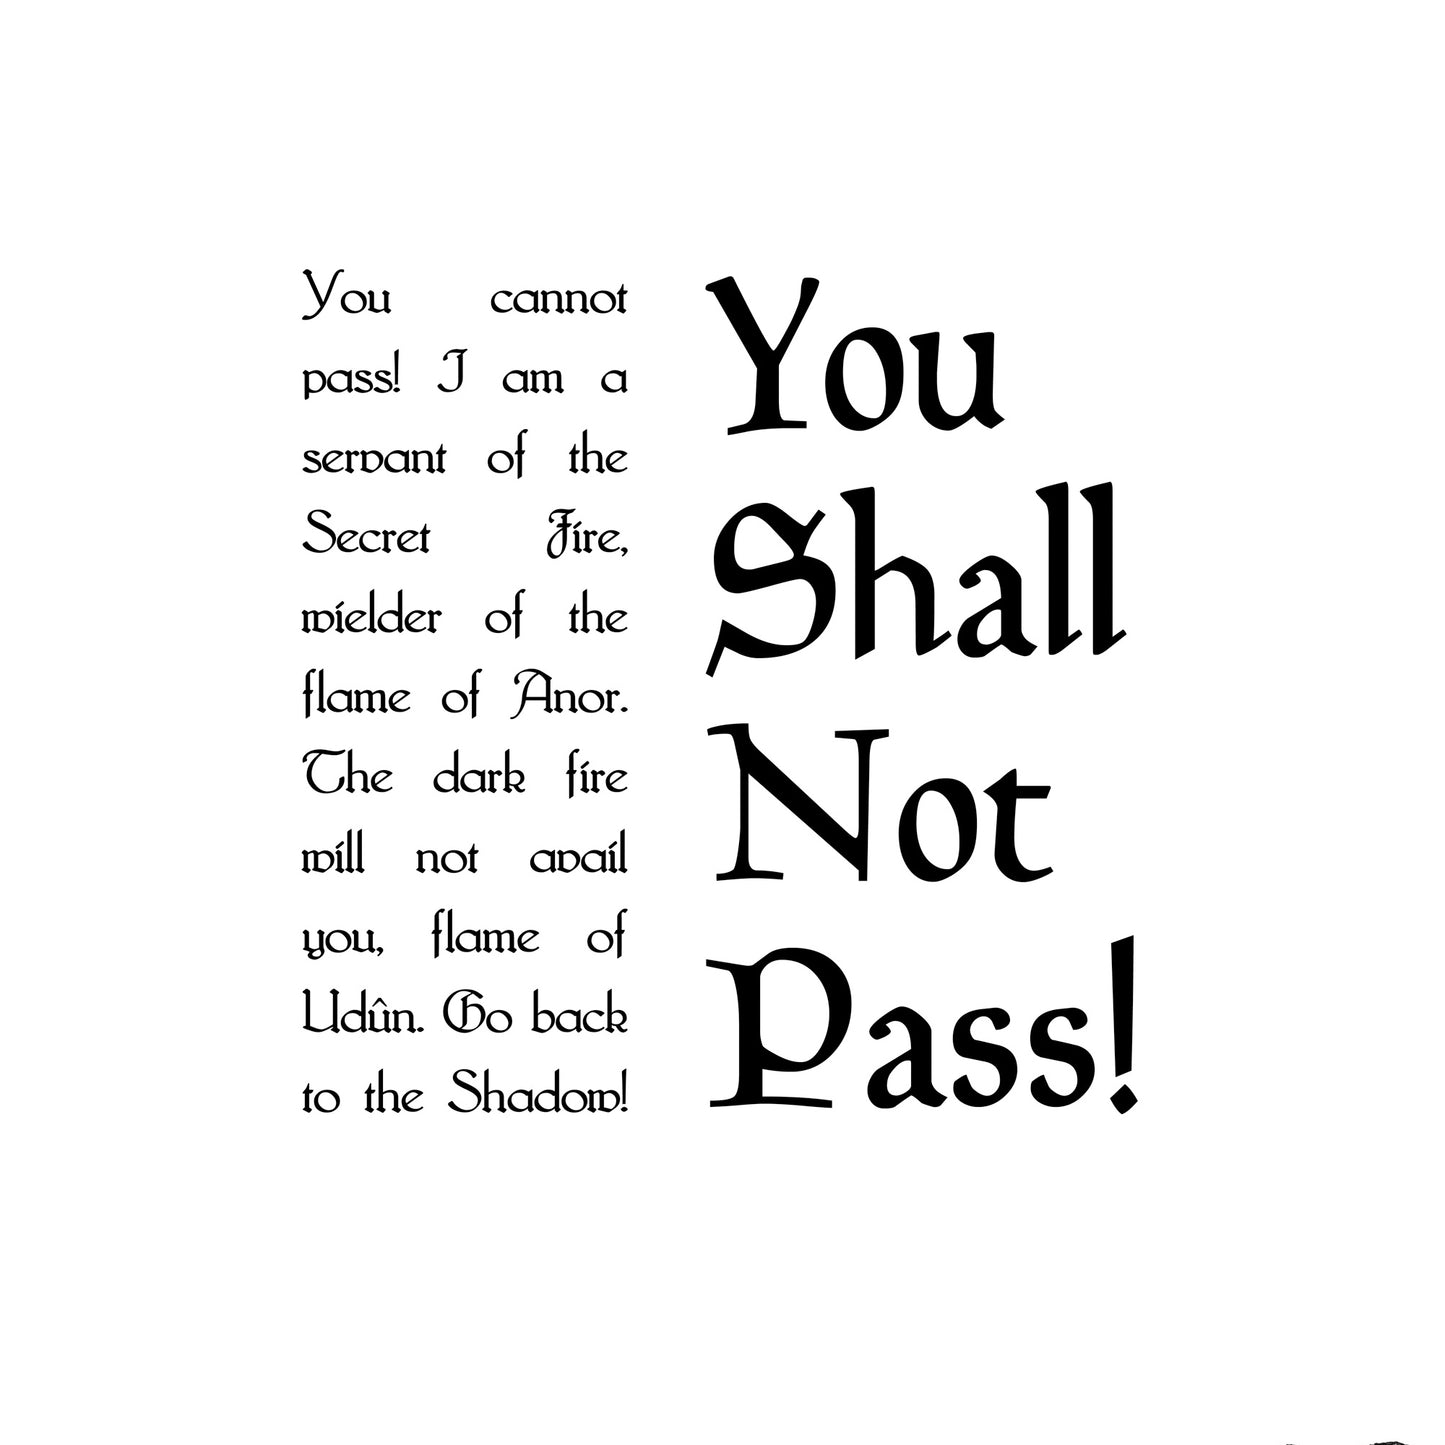 Balrog vs Gandalf - You Shall Not Pass - LOTR Poster